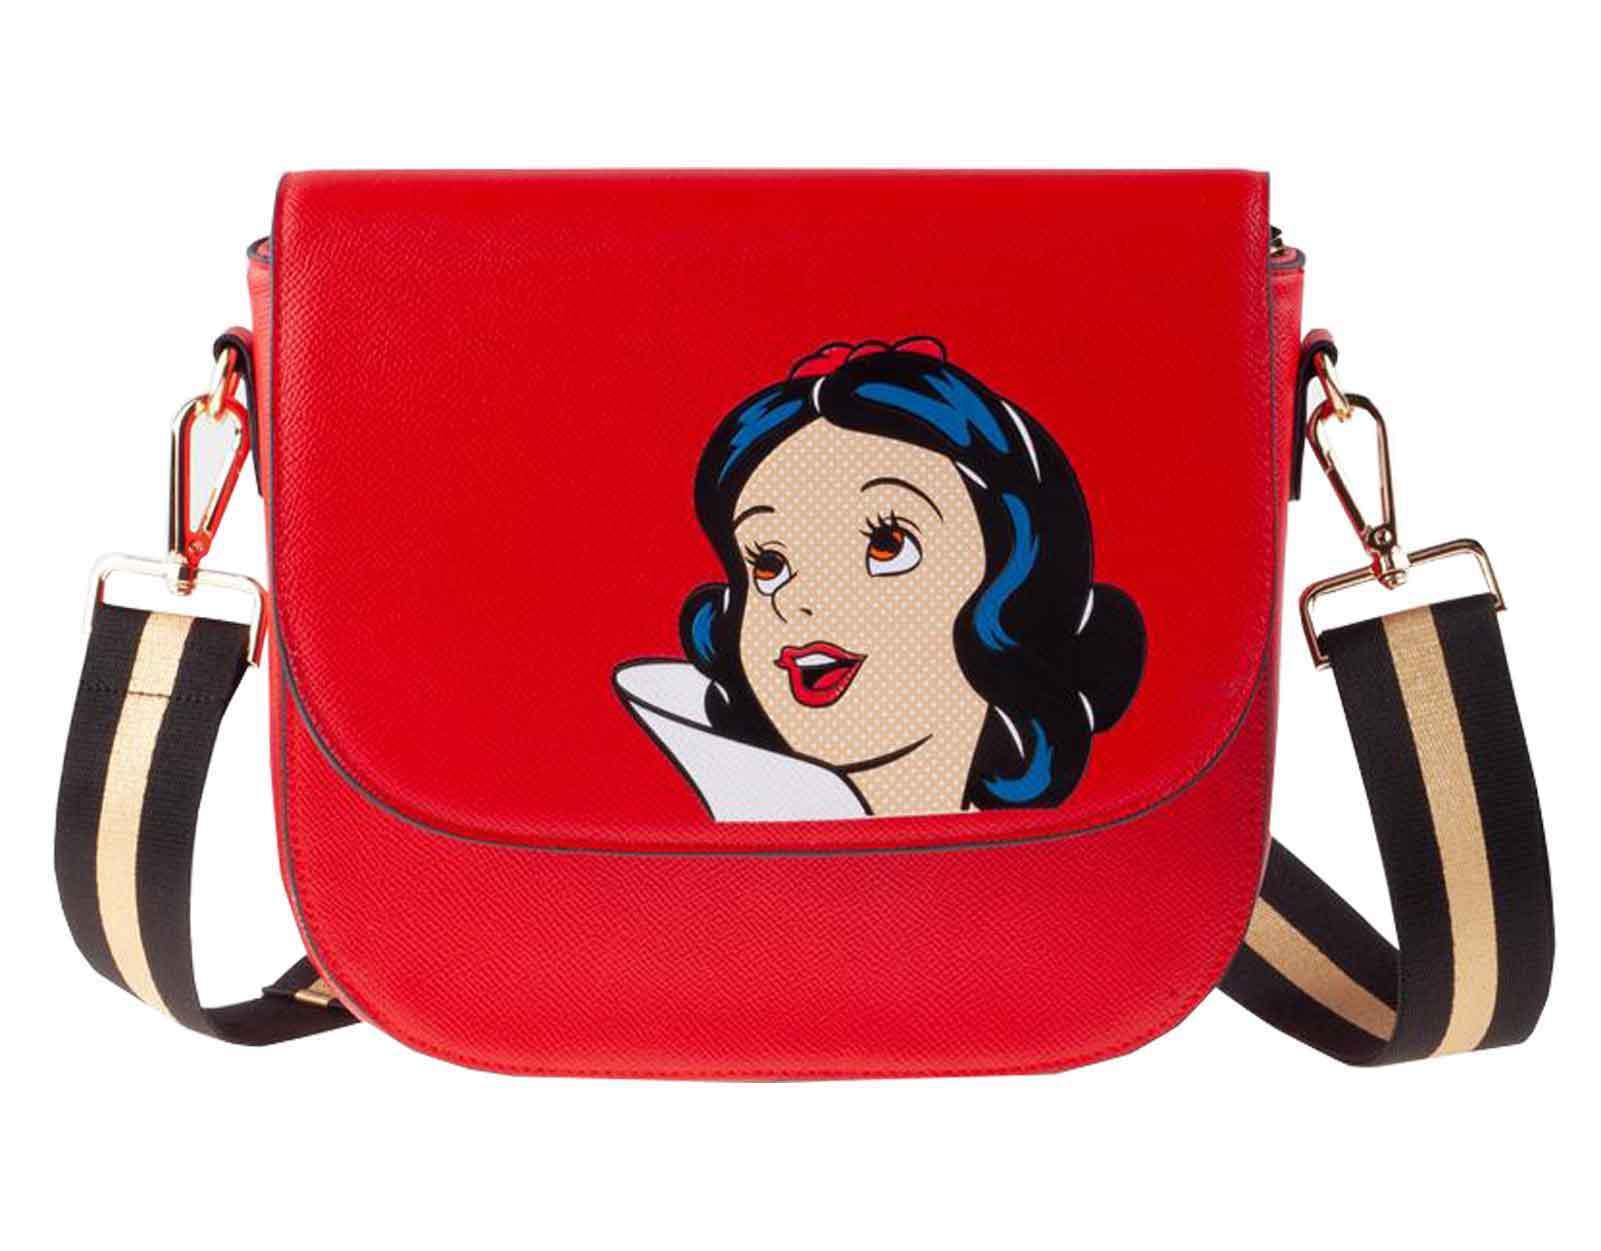 Snow White Shoulder Bag Portrait Print new Official Disney Red One Size